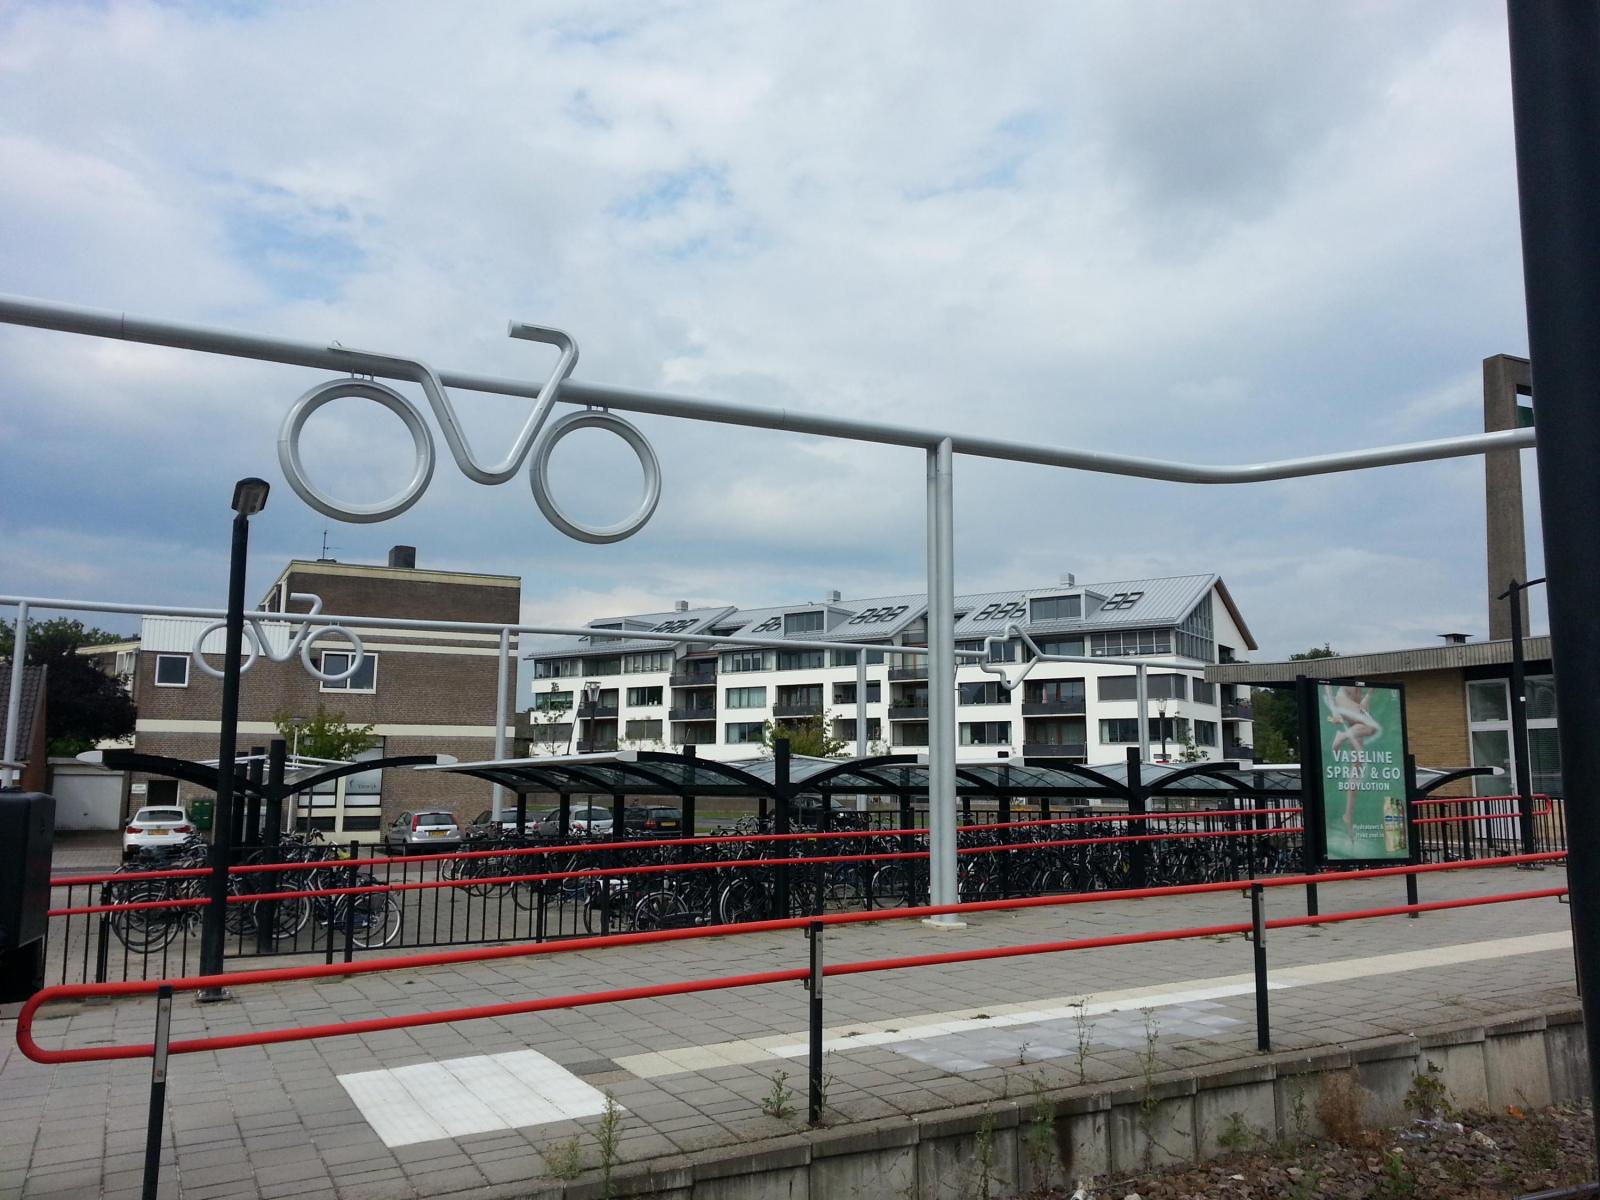 Rotocoat-verzinken-poedercoaten-urban frame-station-Oldenzaal-005.jpg